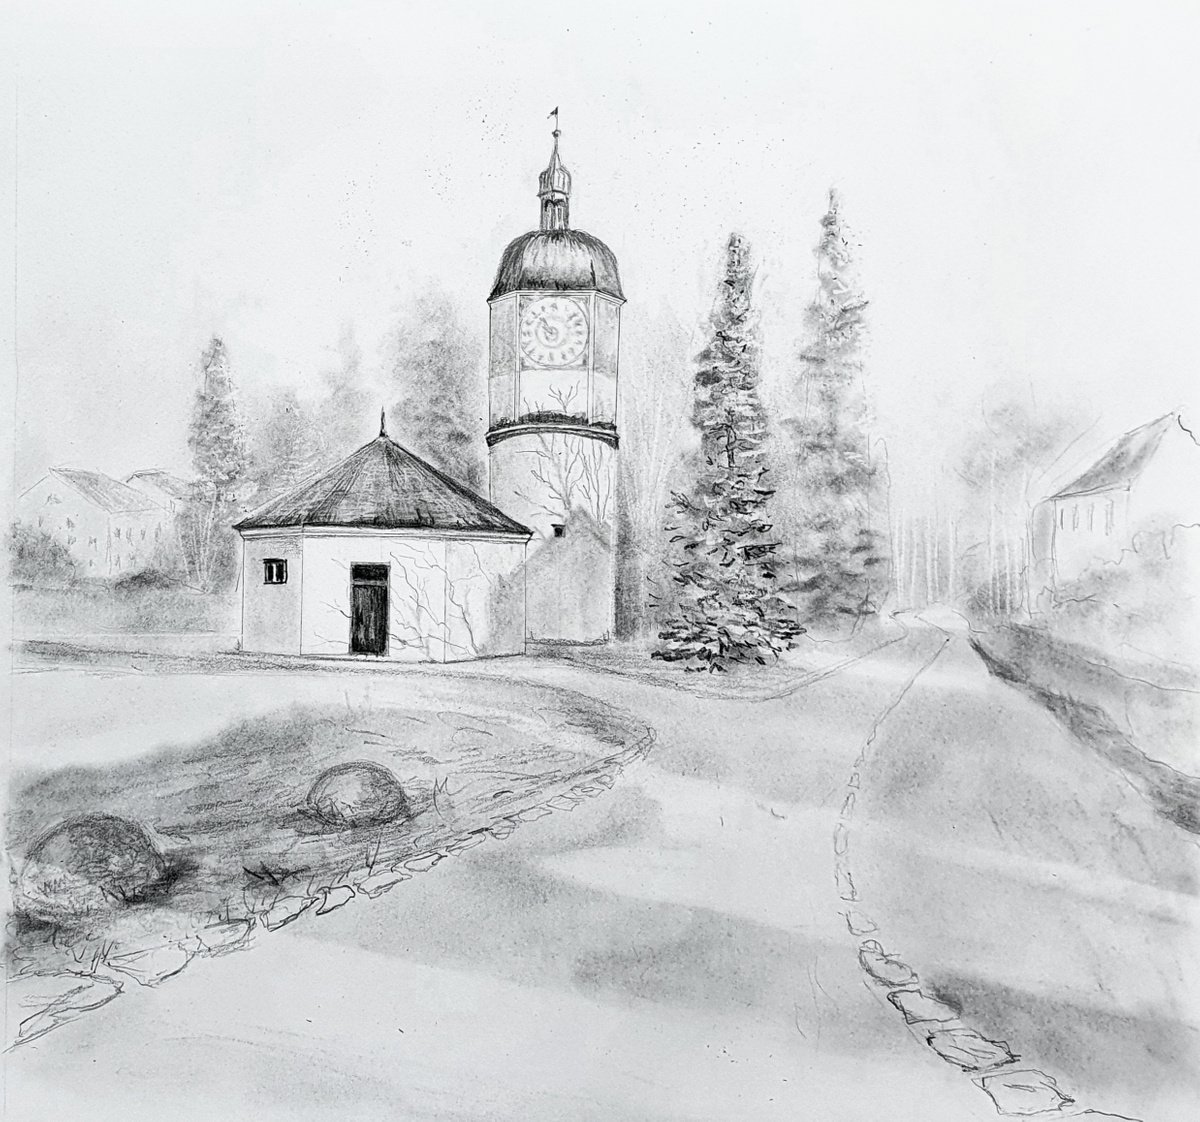 Burghausen. Sketch by Yulia Schuster